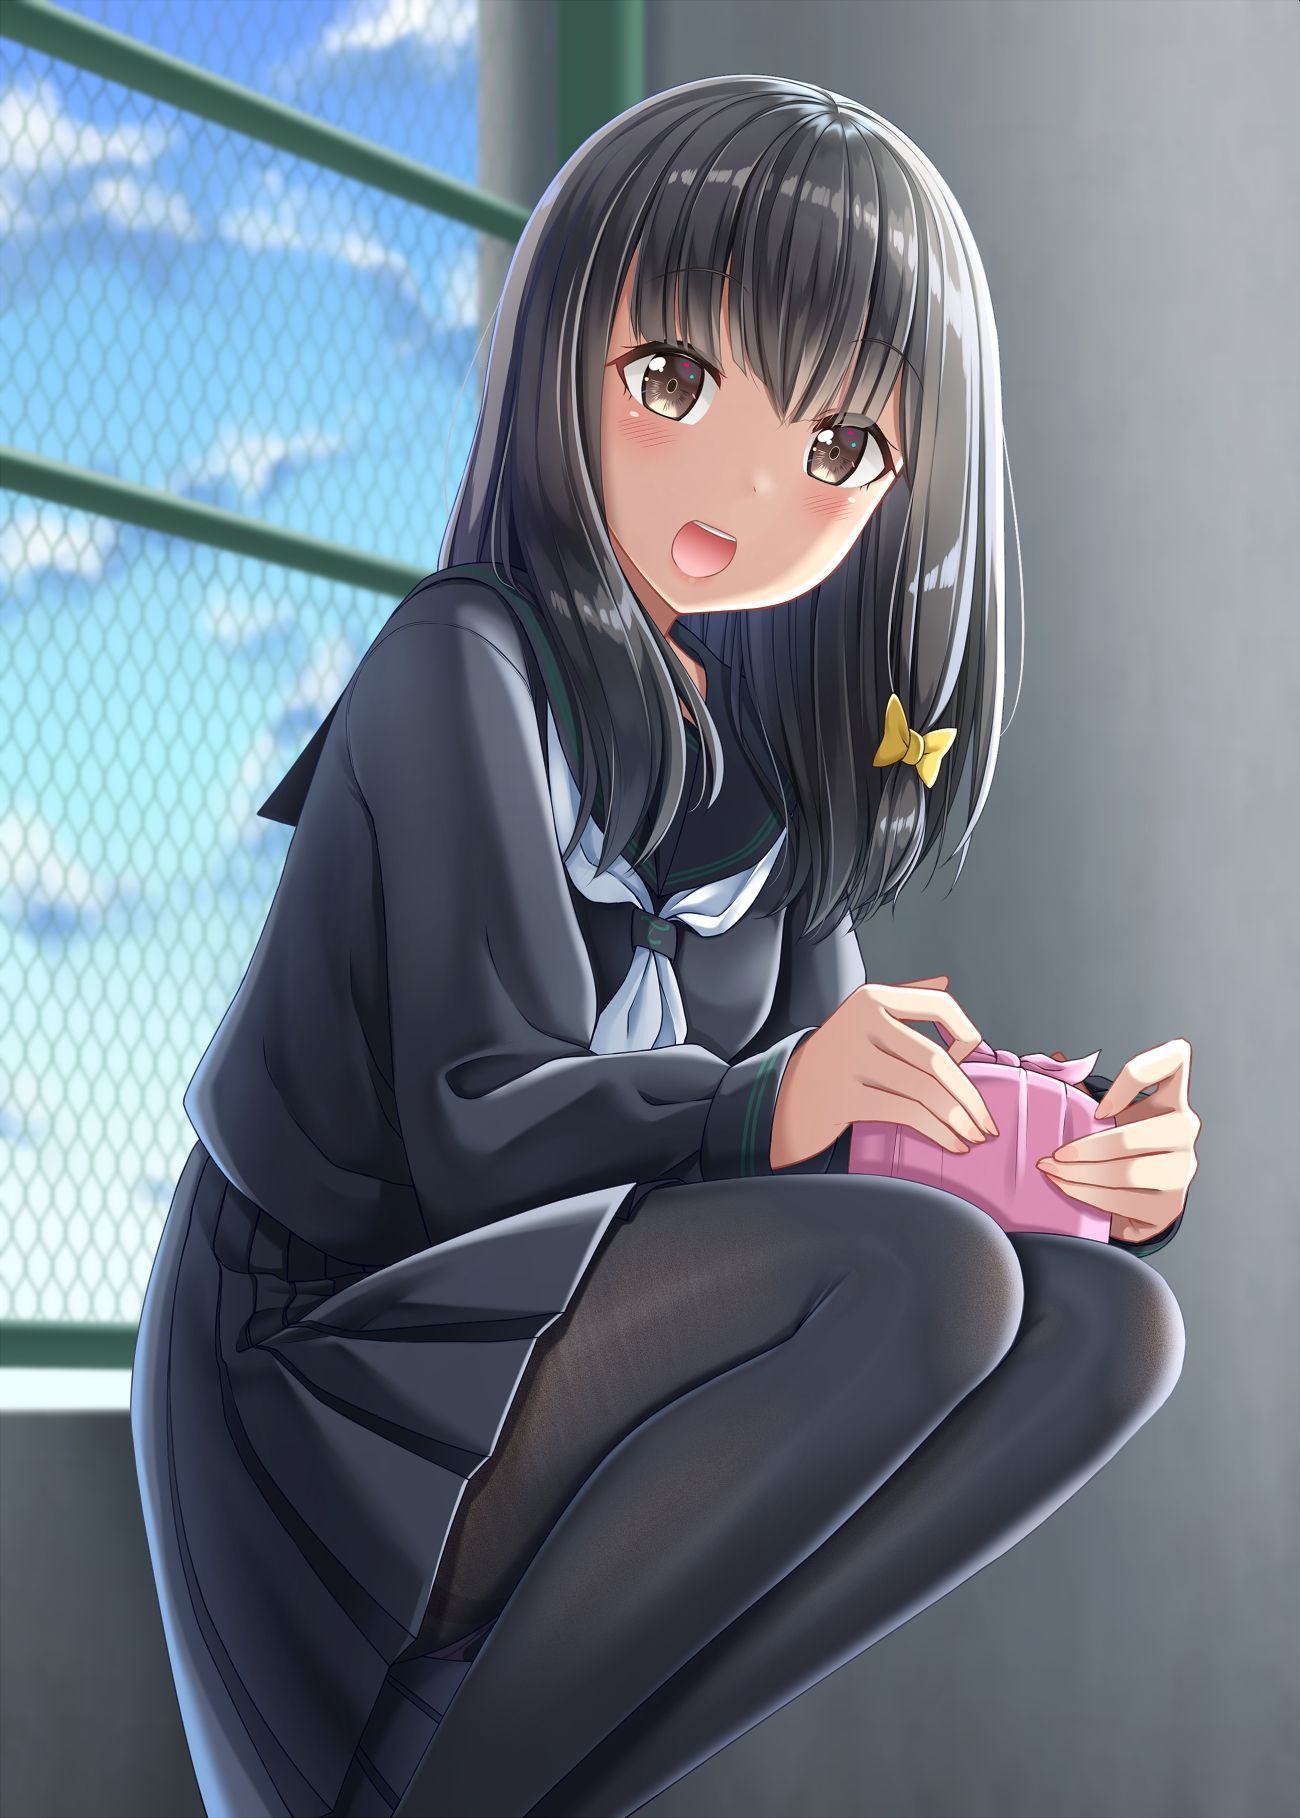 Secondary image of a cute girl in school uniform part 10 [Uniform/non-erotic] 4